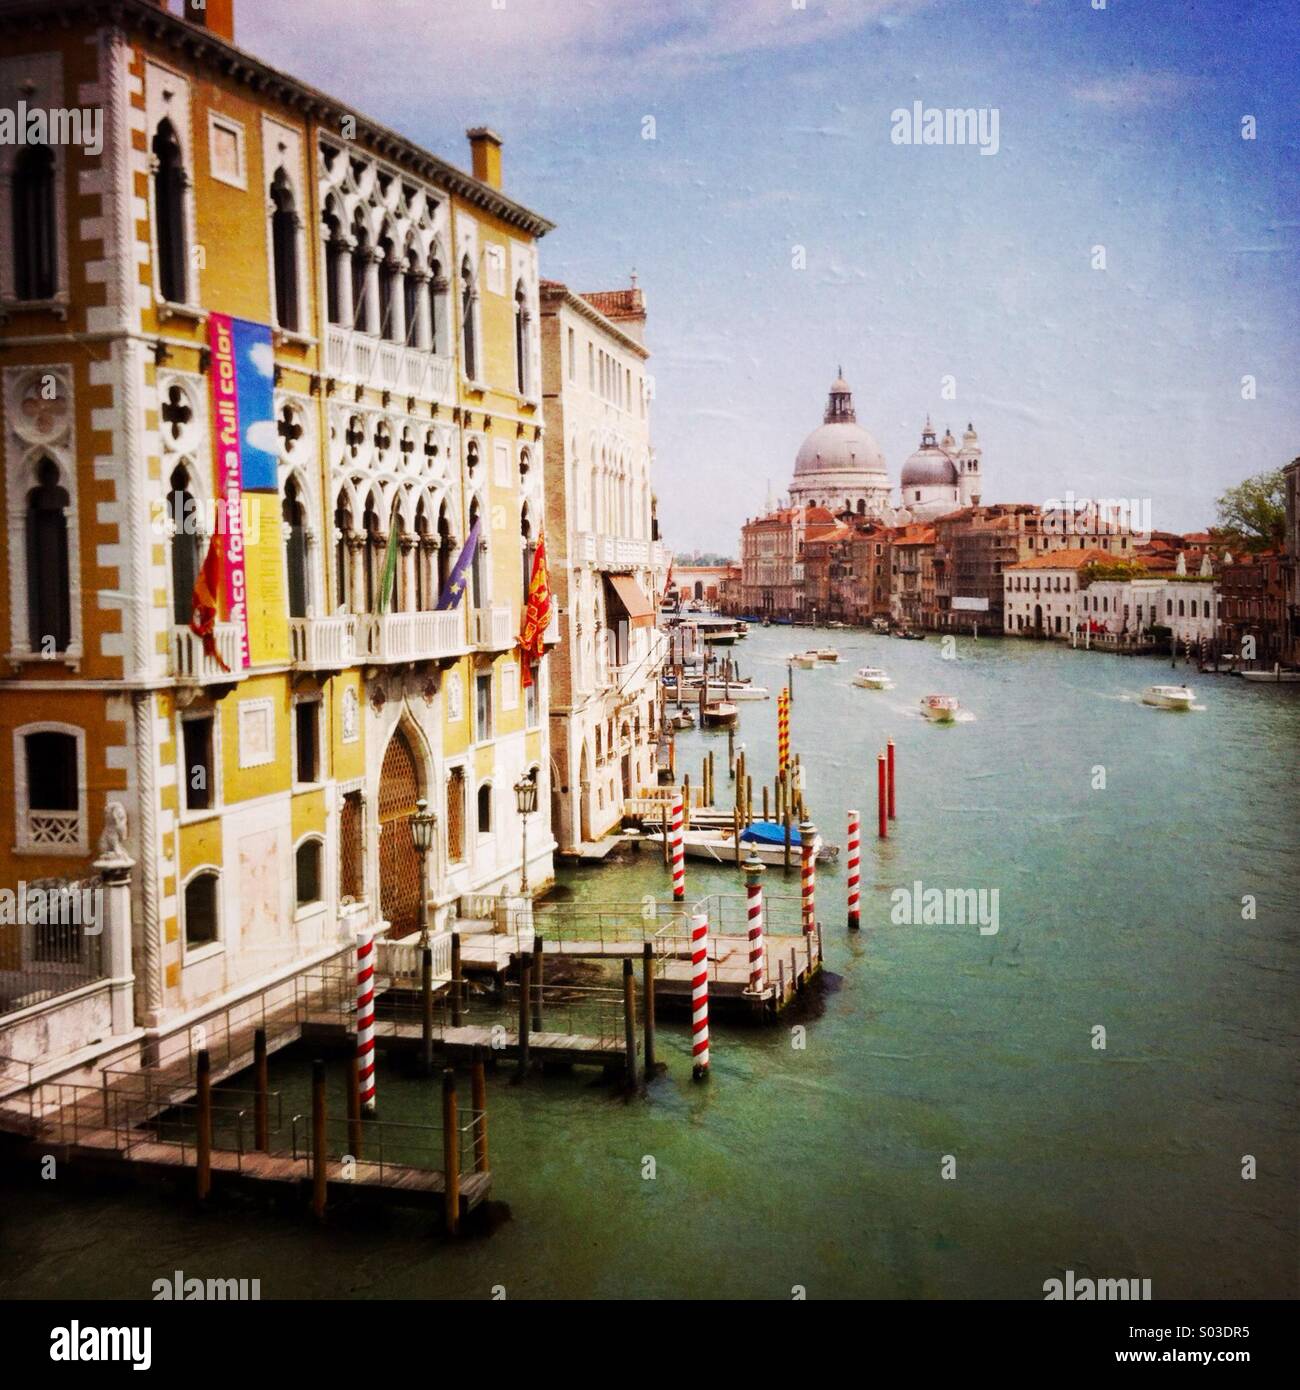 The grand canal. Venice Italy. Stock Photo